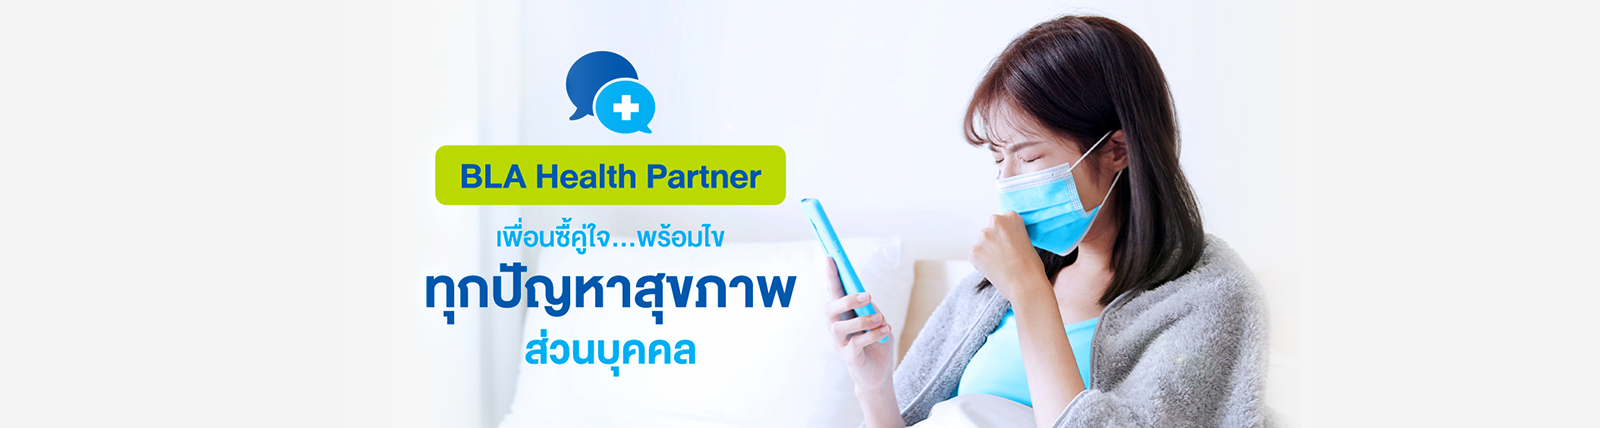 BLA Health Partner Banner